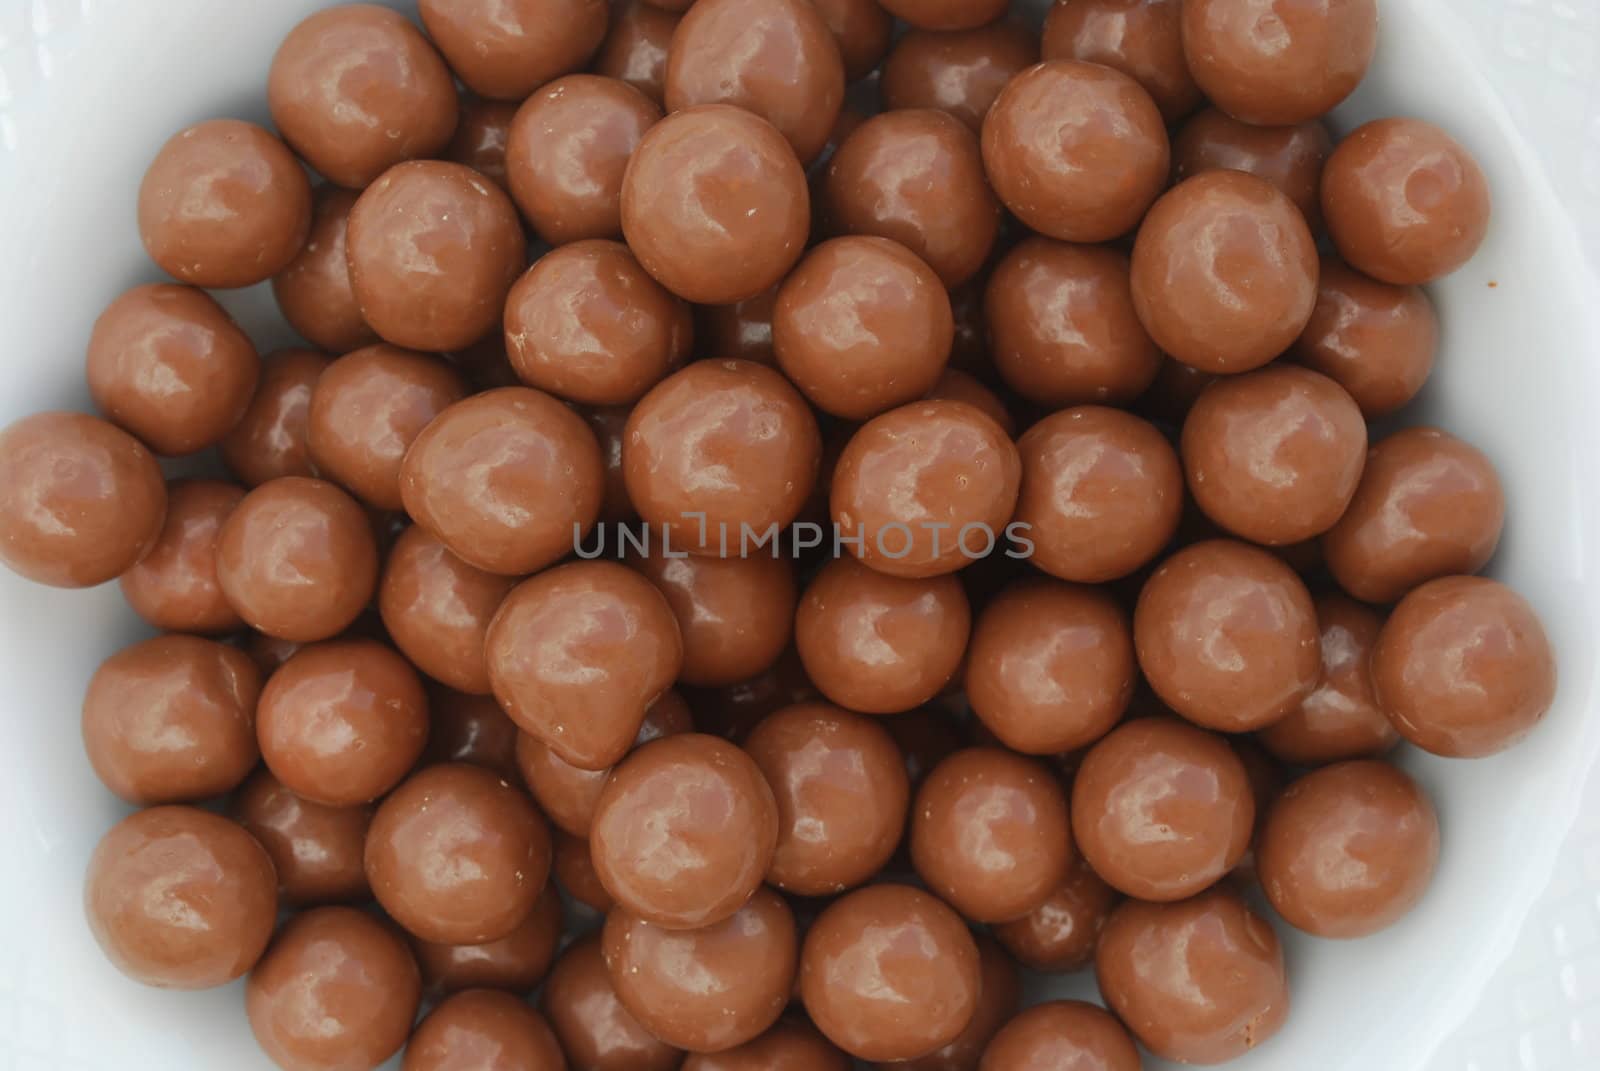 Chocolate balls by luissantos84